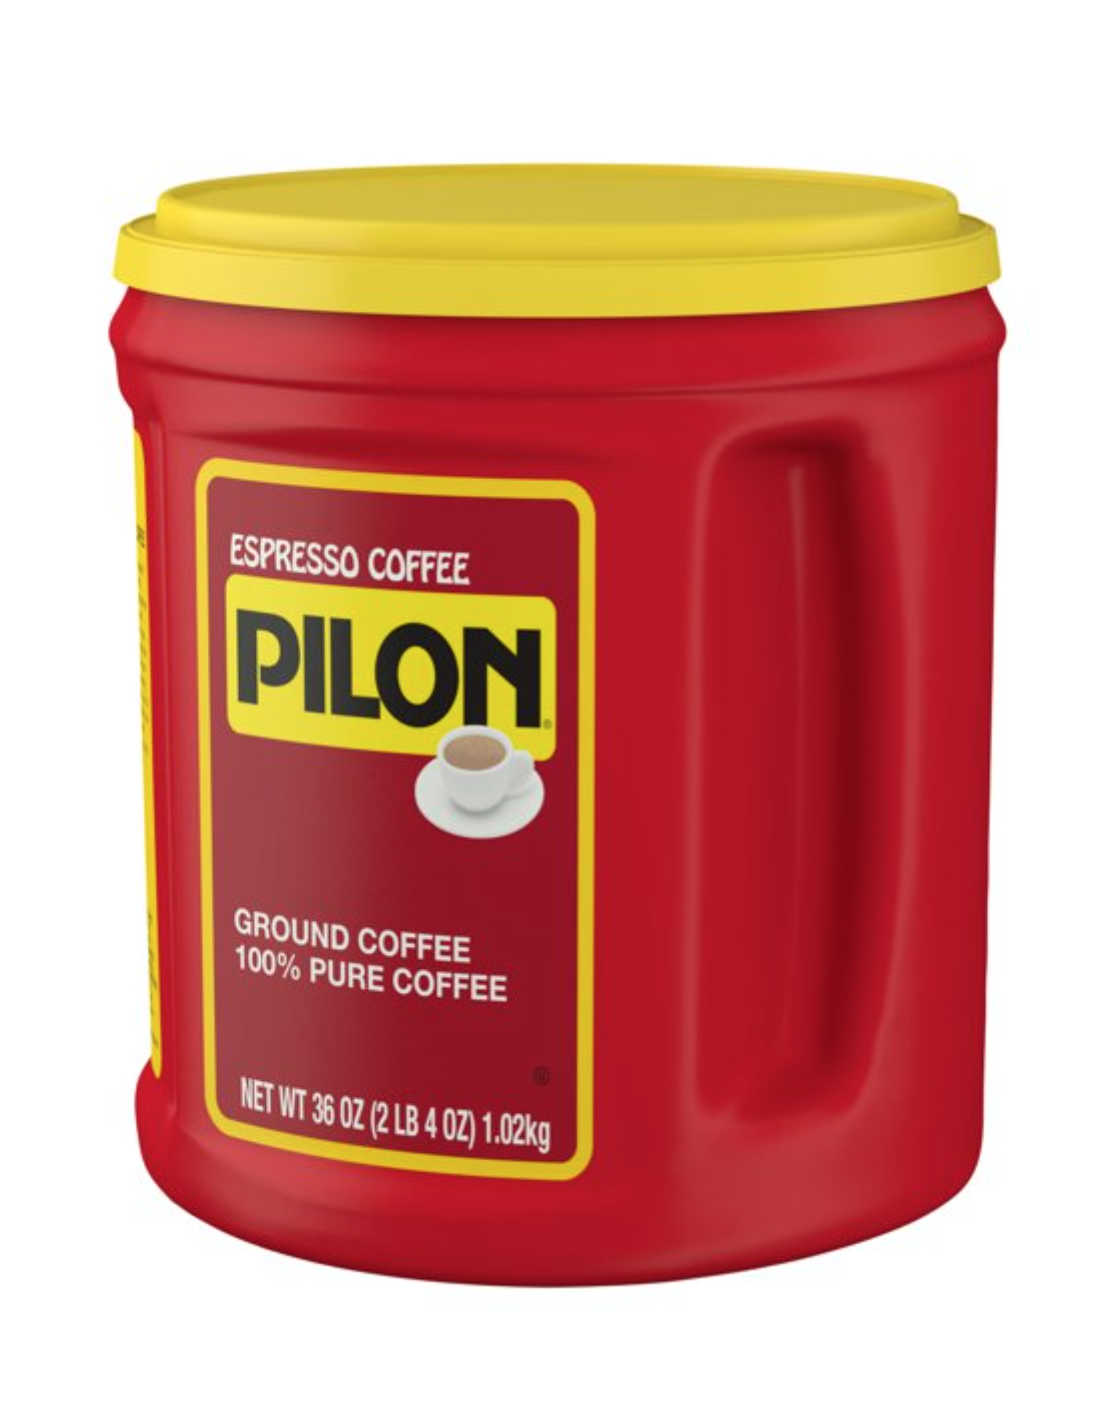 Pilon Espresso Ground Coffee, 36 Oz.